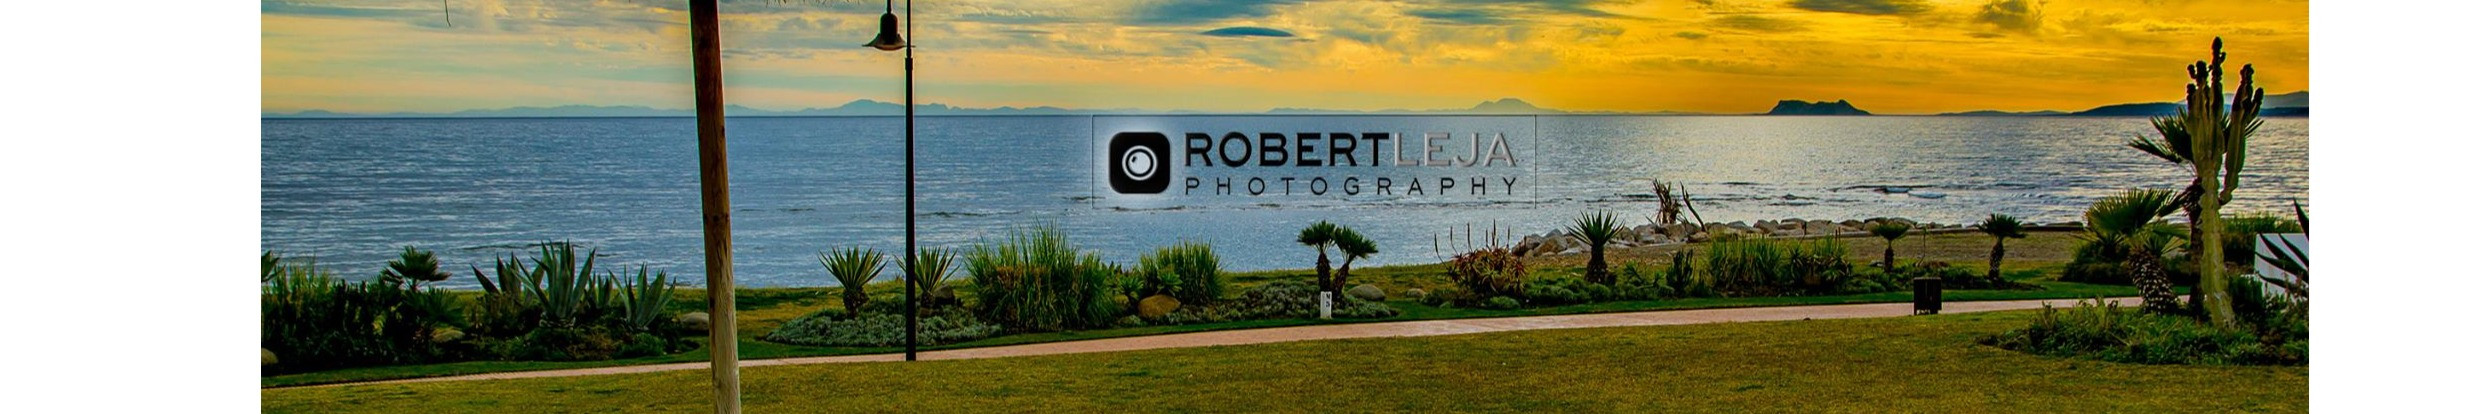 Robert Leja Photography Services